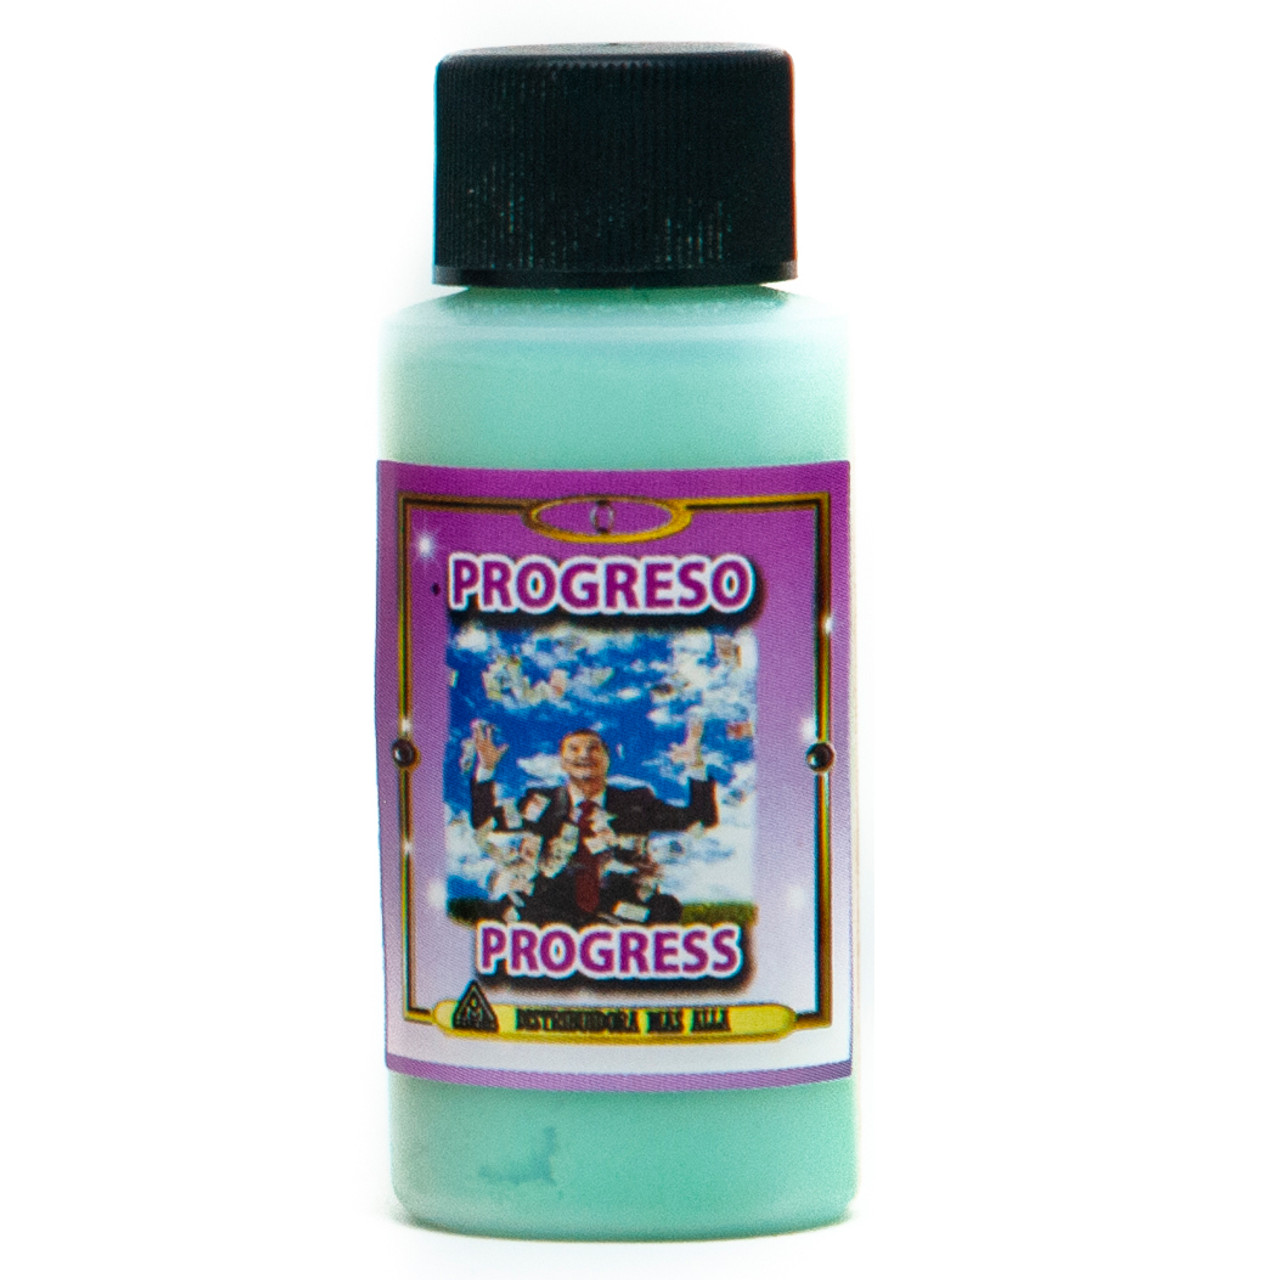 Polvo Progreso - Mystical Spiritual Powder For Spell Progress